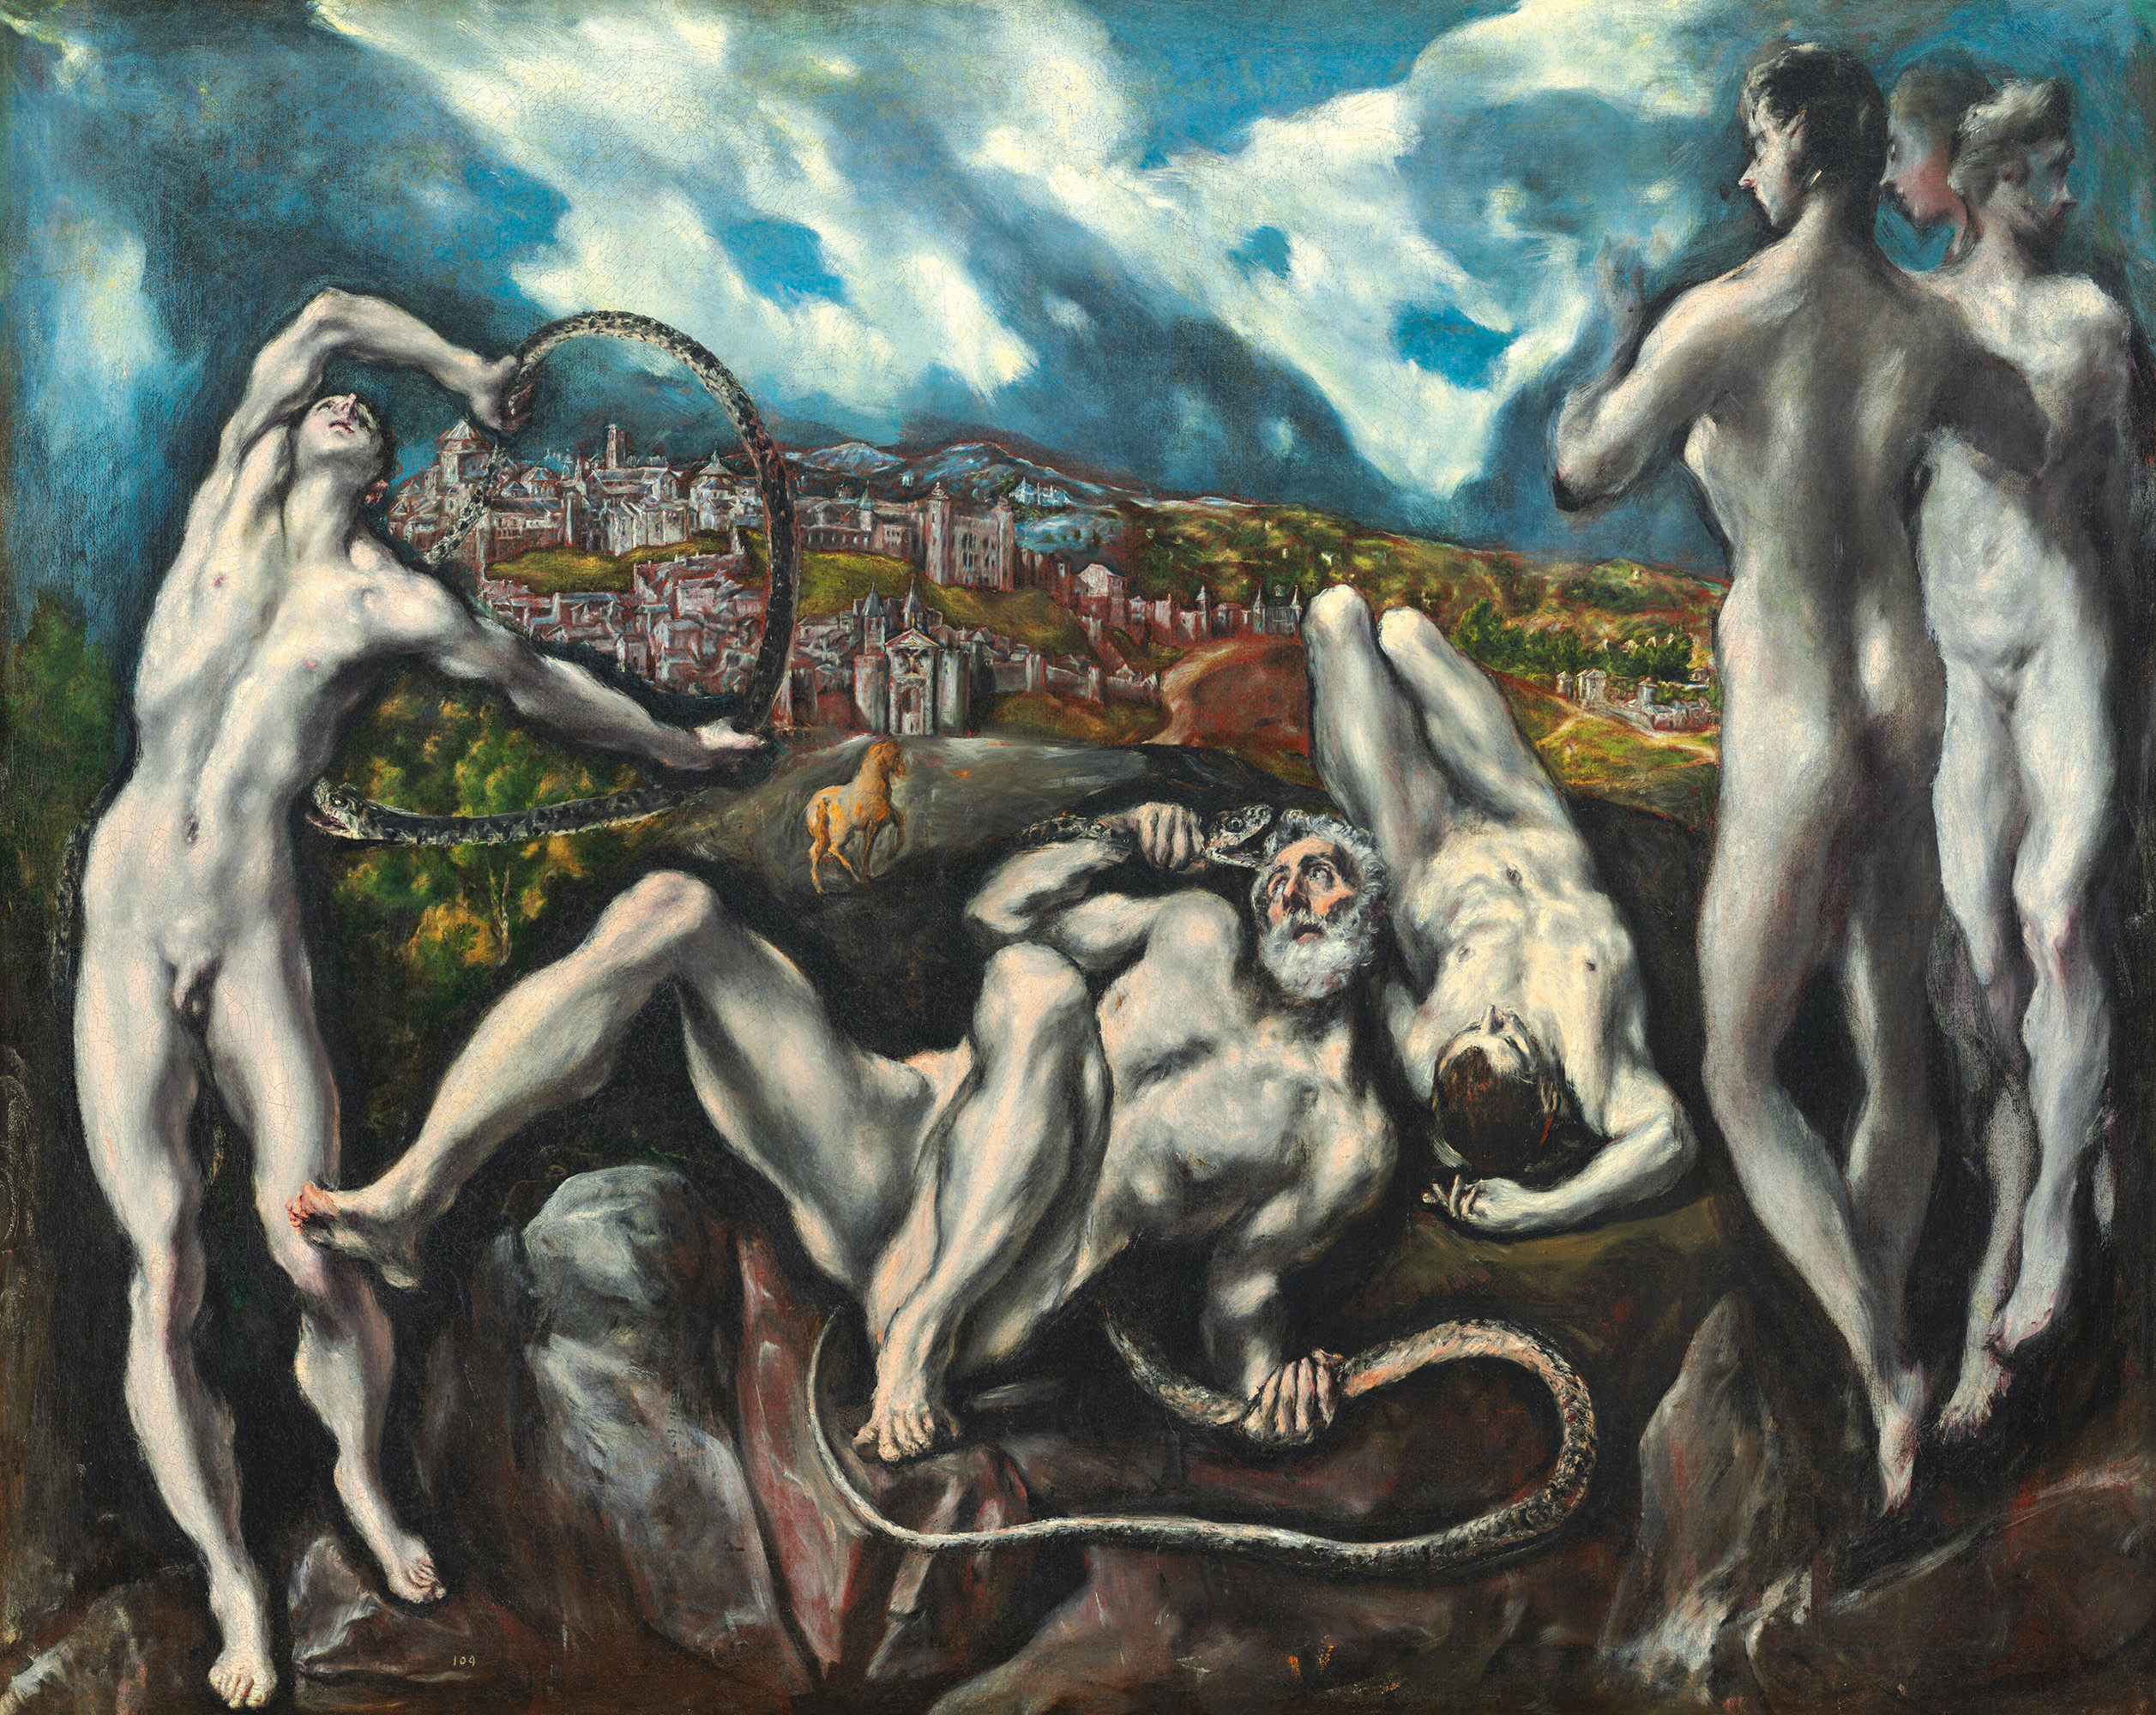 El Greco at the Museum of Fine Arts: Unexpectedly Transforma...